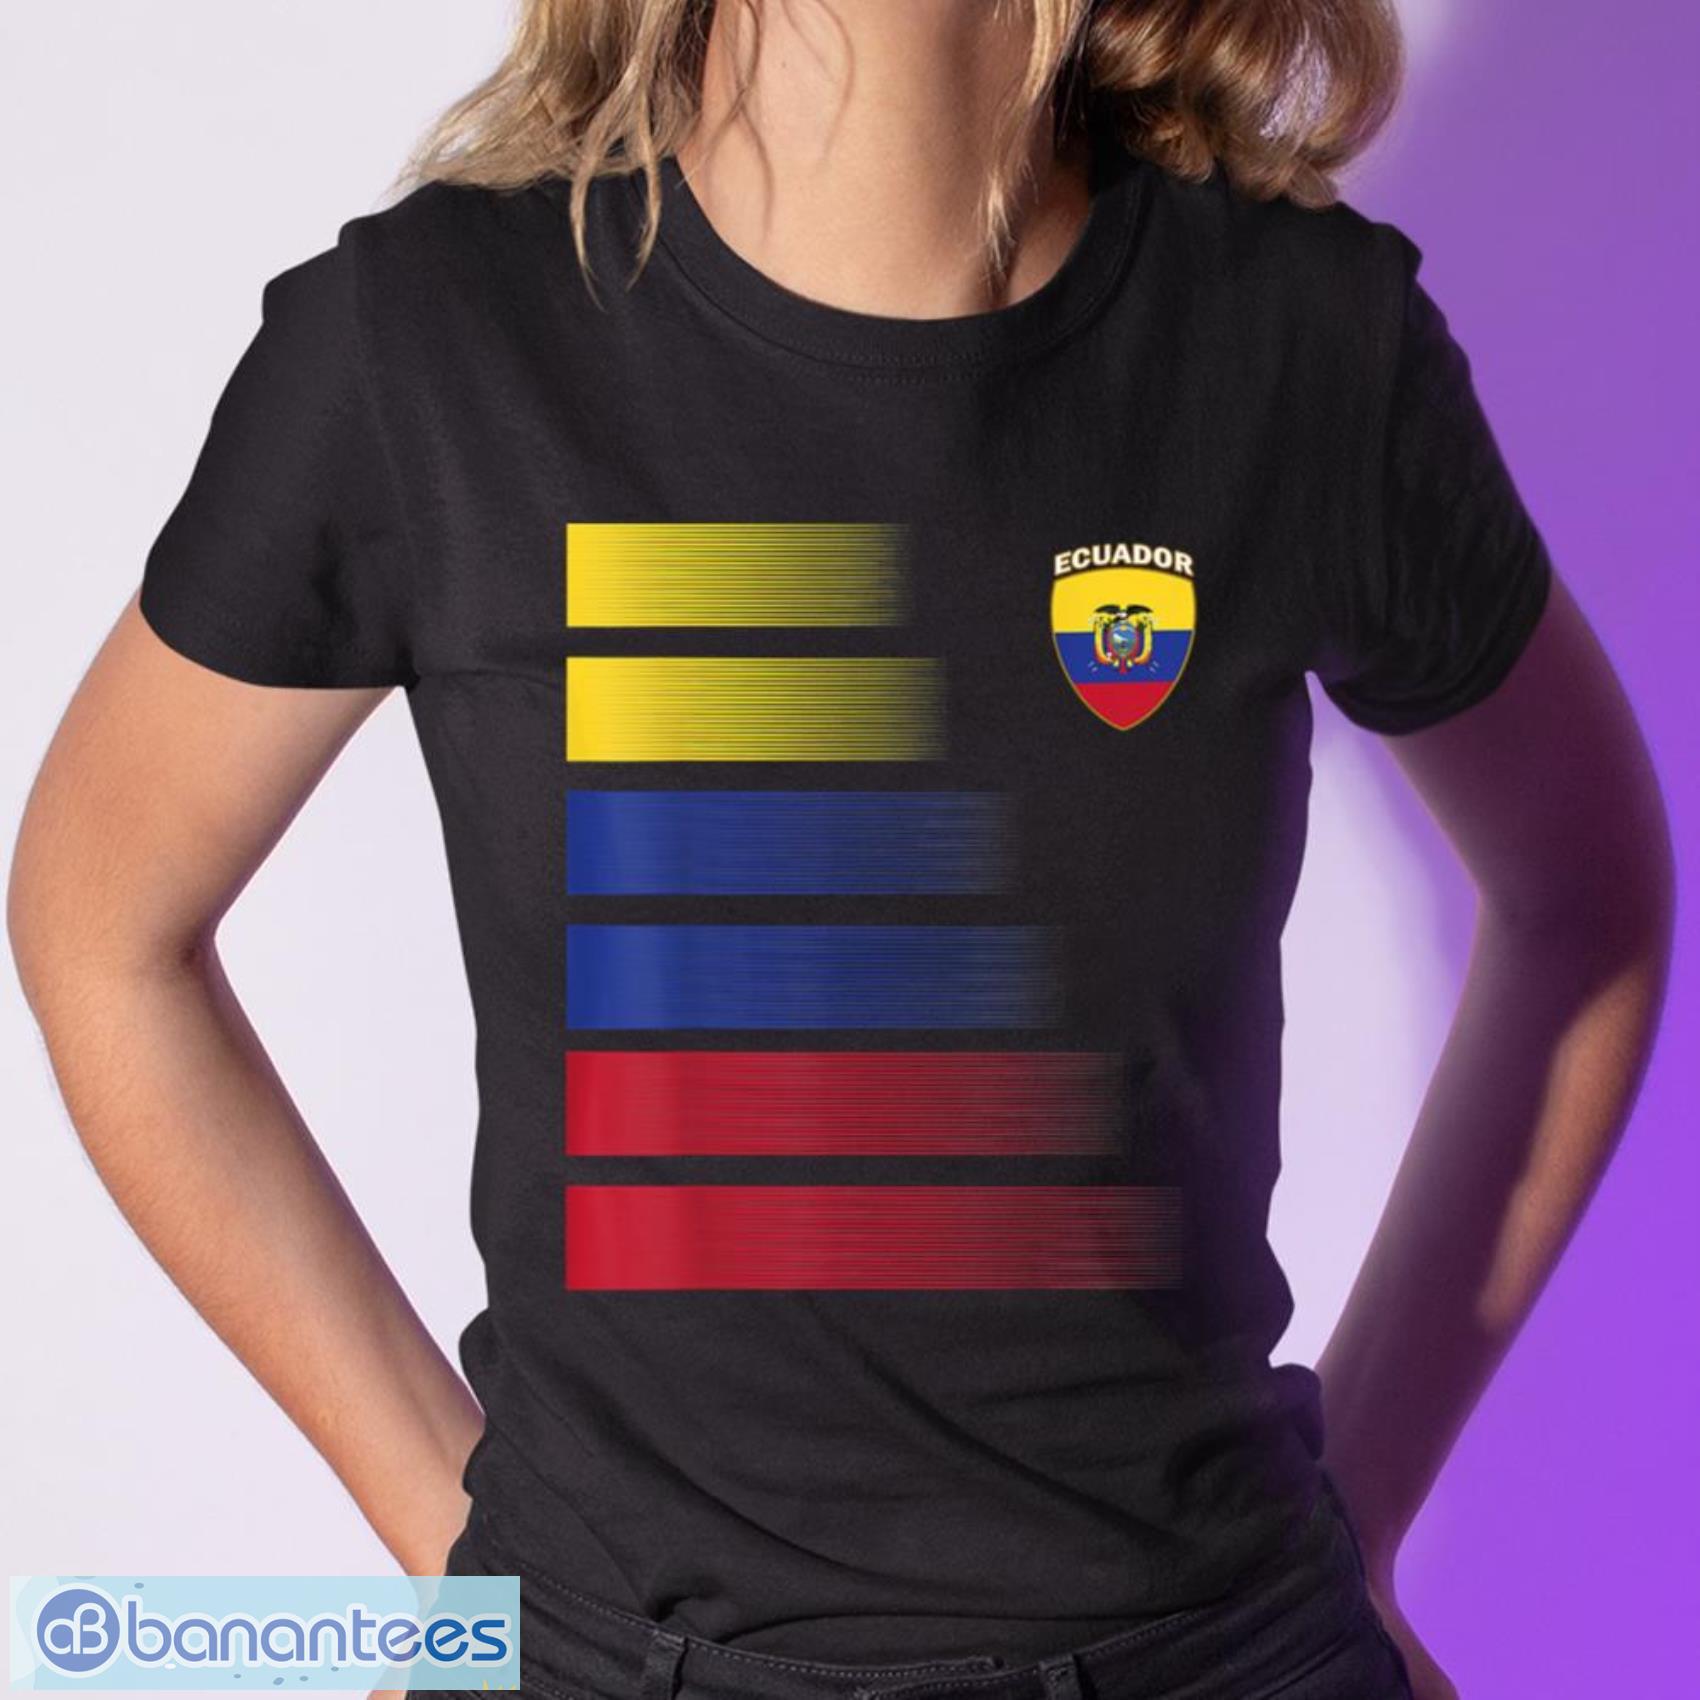 ecuador national football team kit